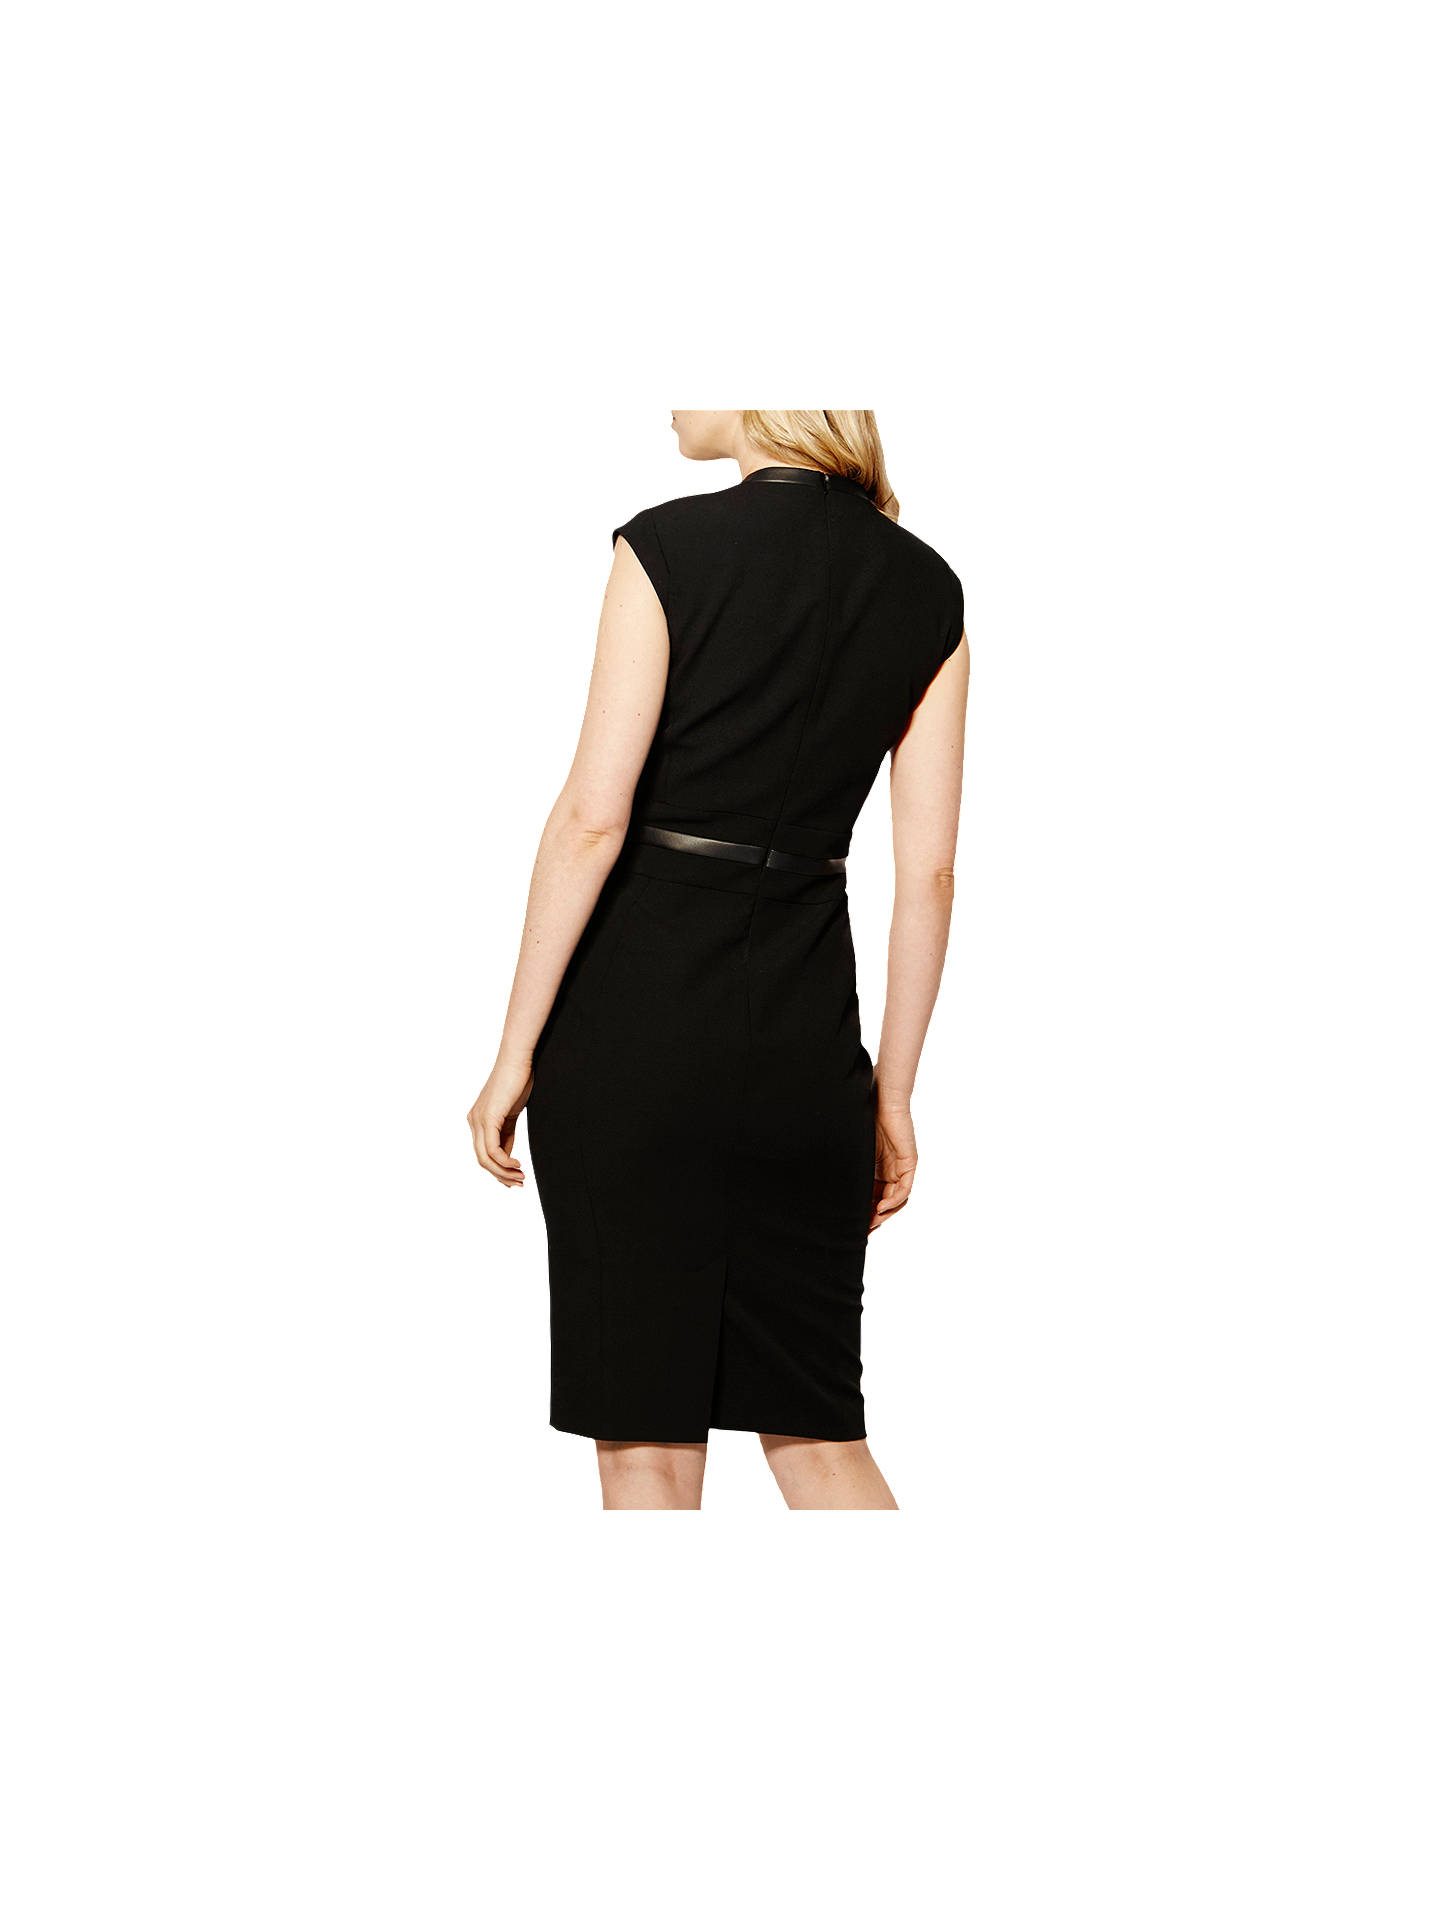 Karen millen black tailored contour bodycon dress